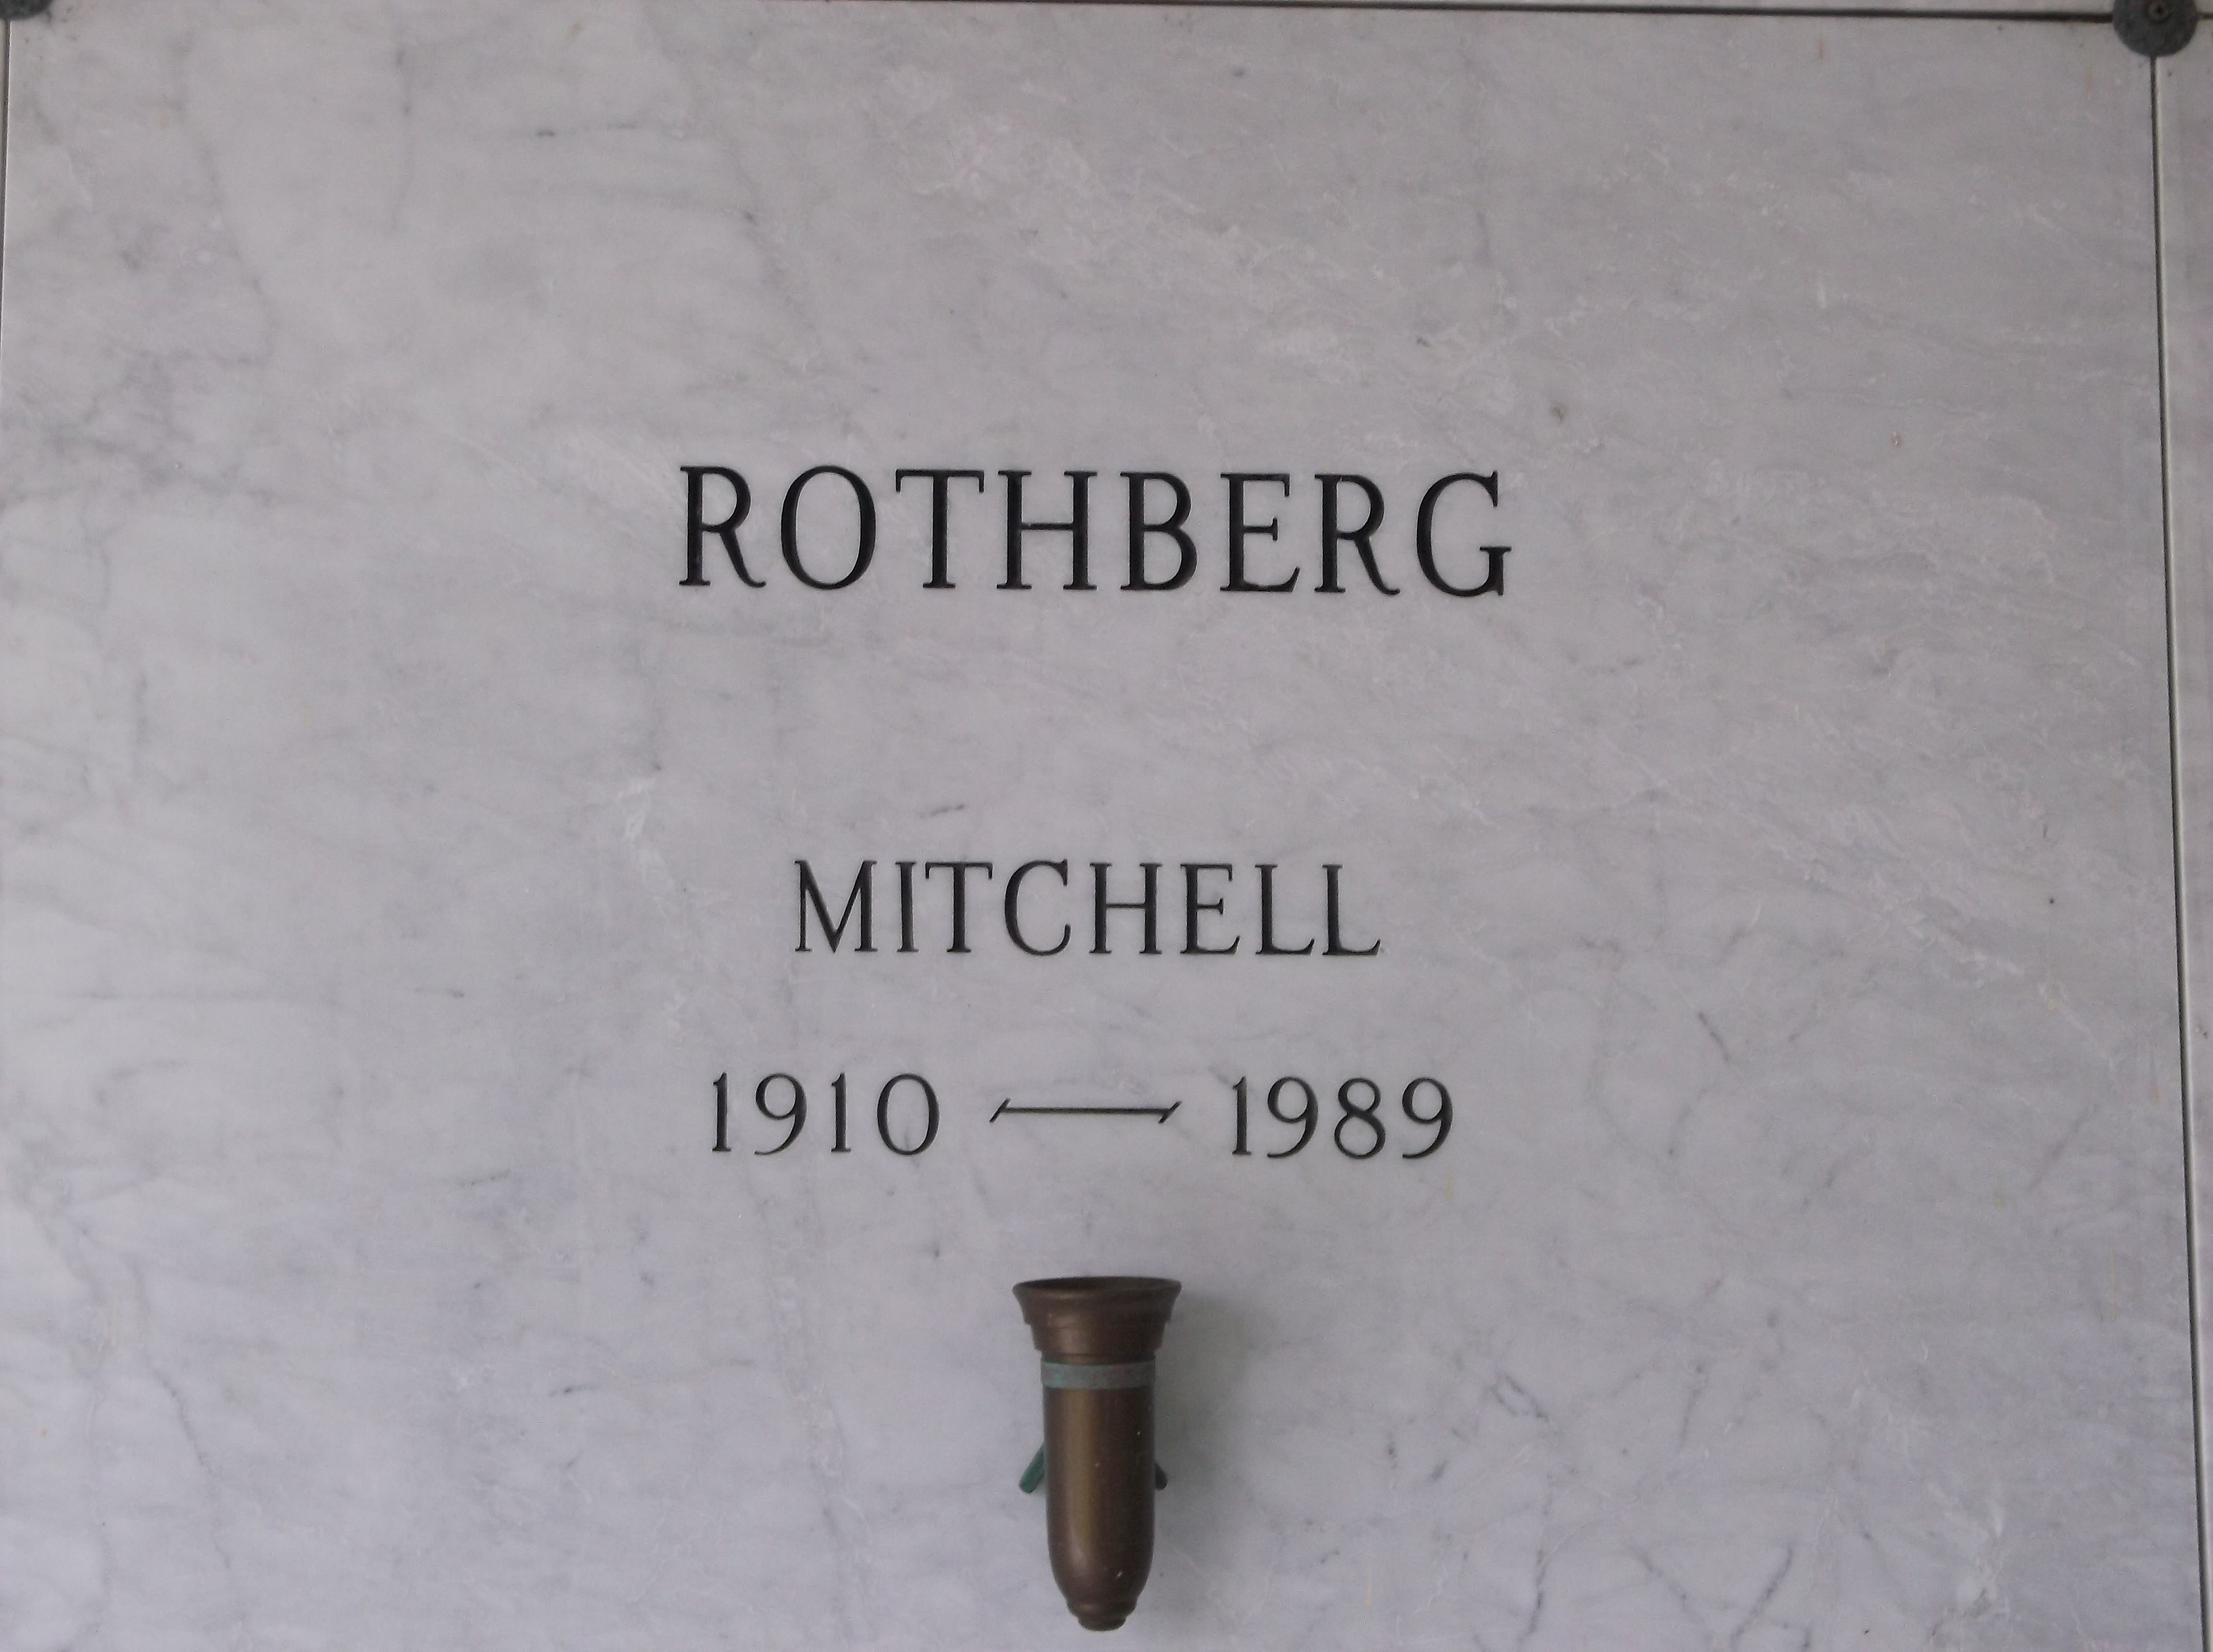 Mitchell Rothberg